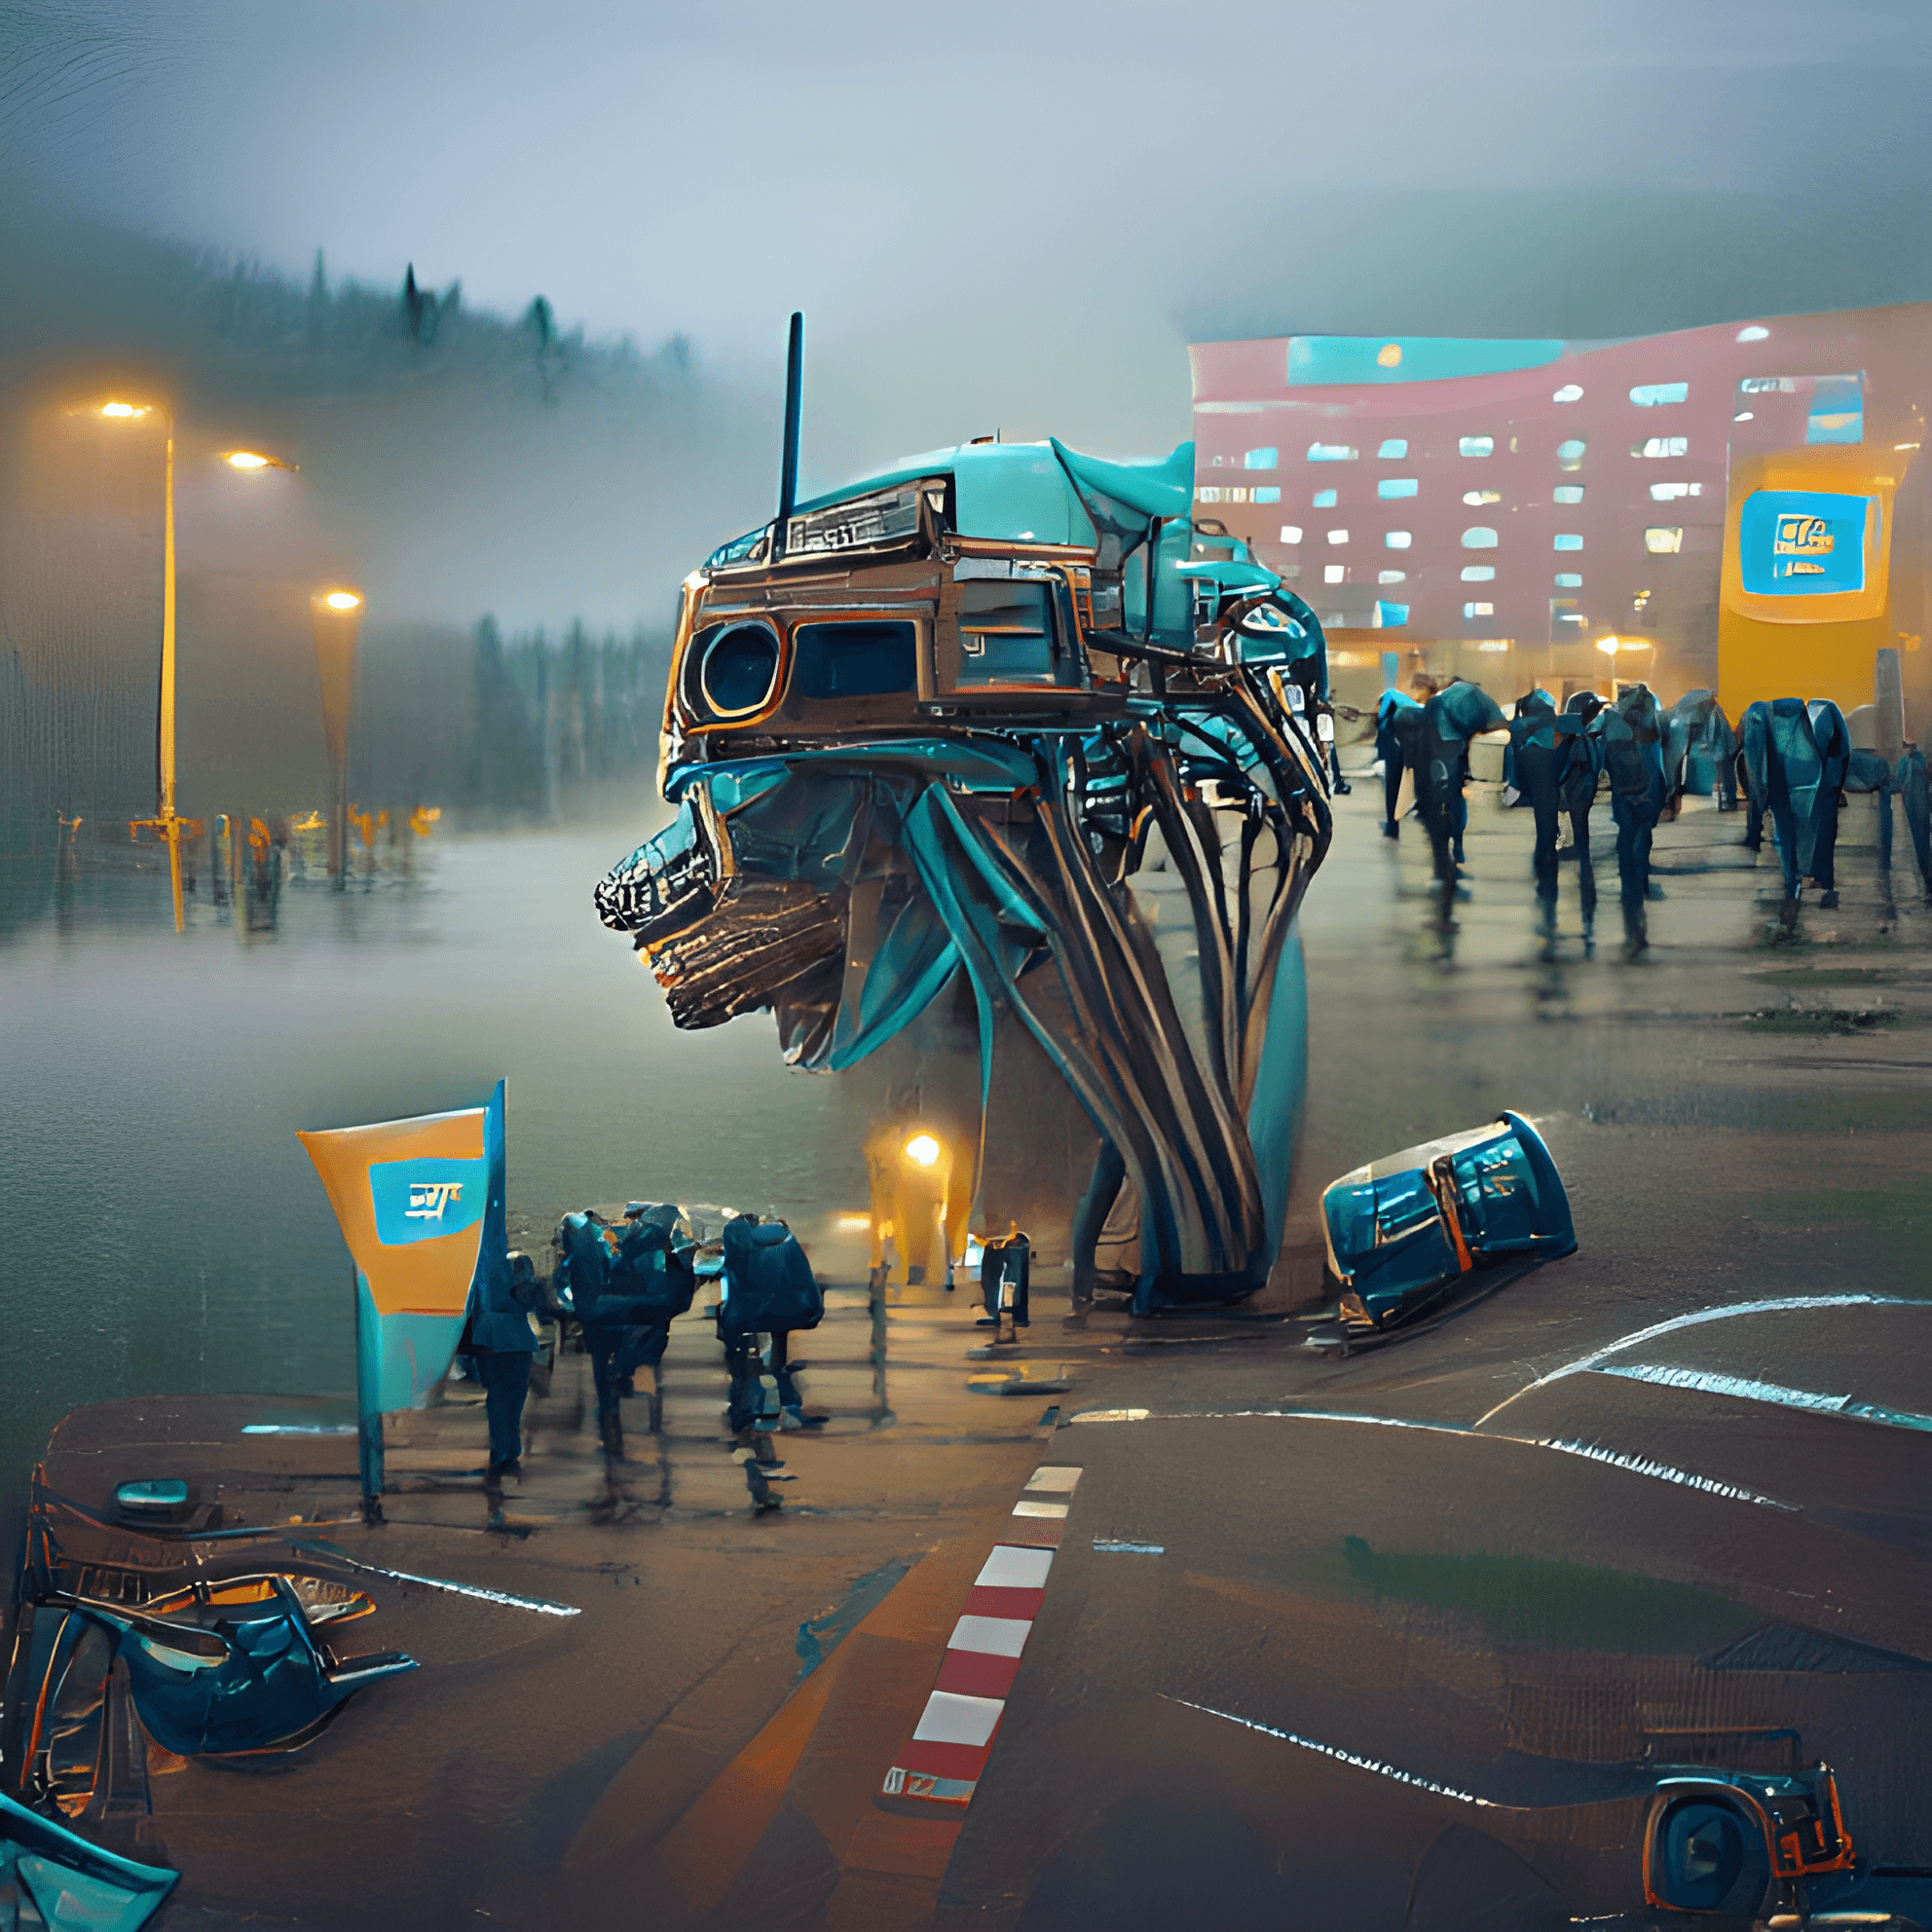 Cyberpunk Dystopian Chaos